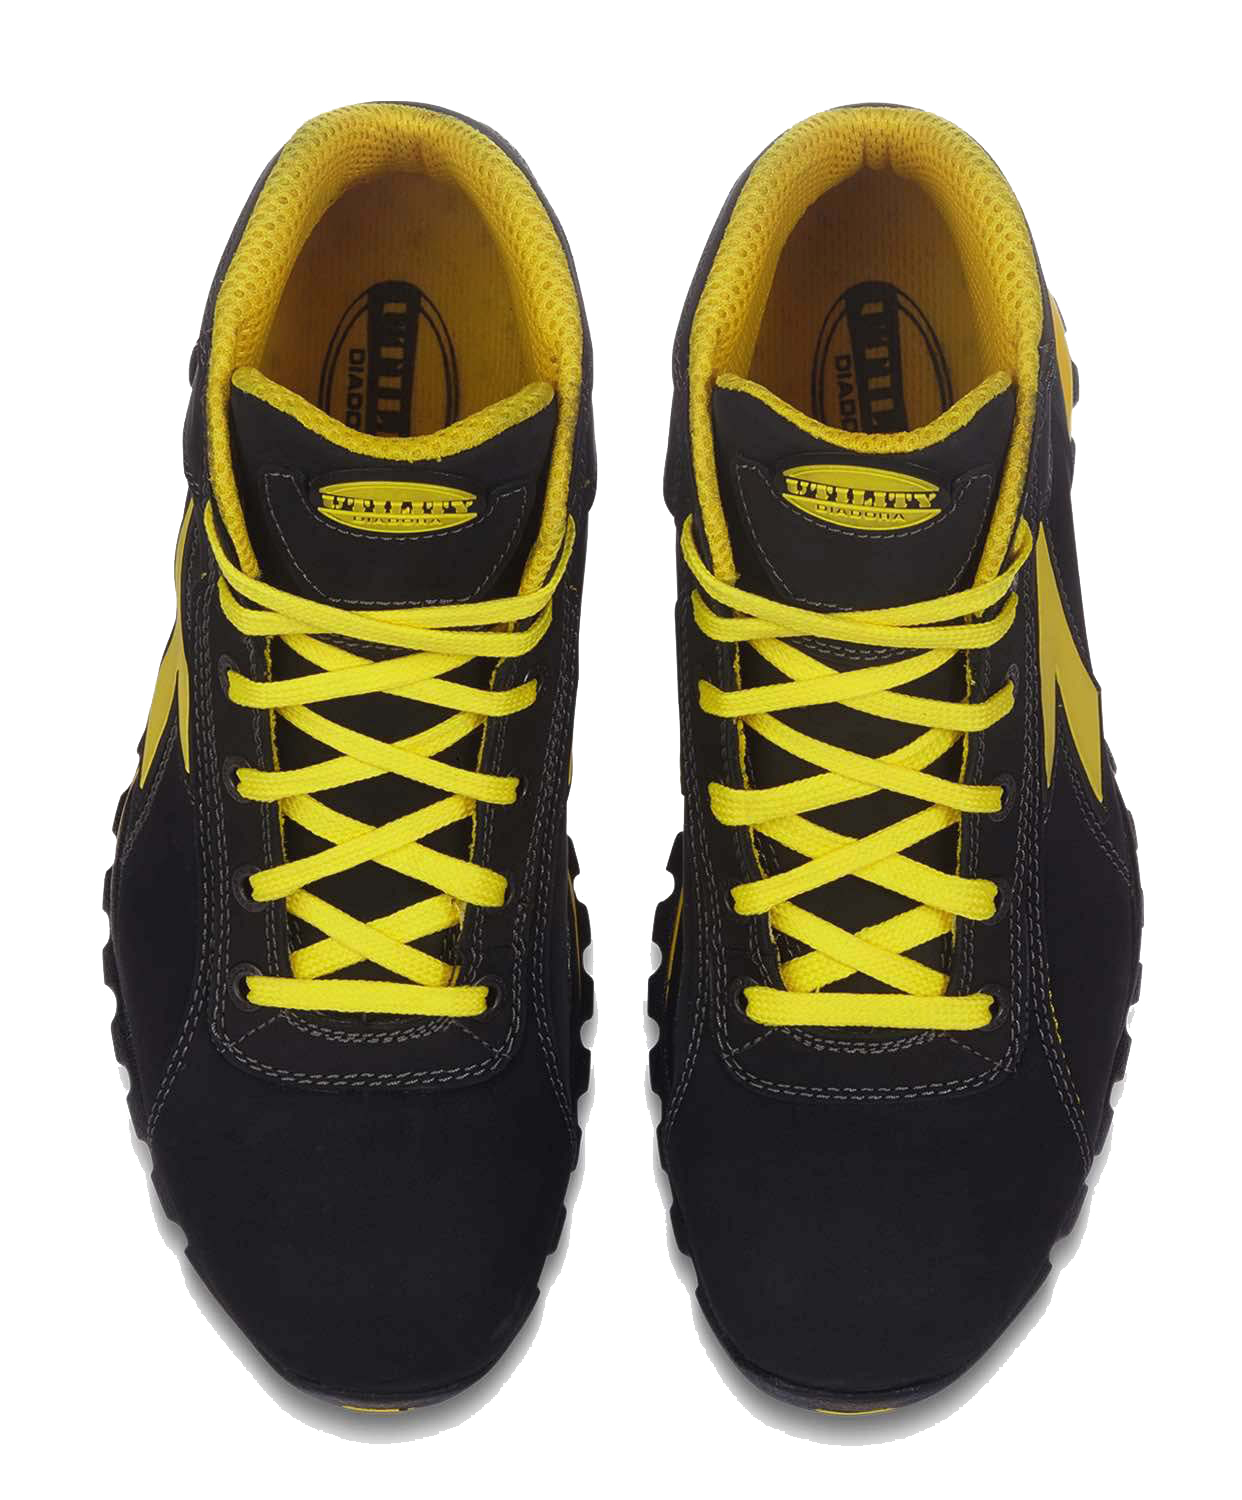 Chaussures de sécurité hautes GLOVE II HIGH S3 SRA HRO noir/jaune P42 - DIADORA SPA - 701.170234